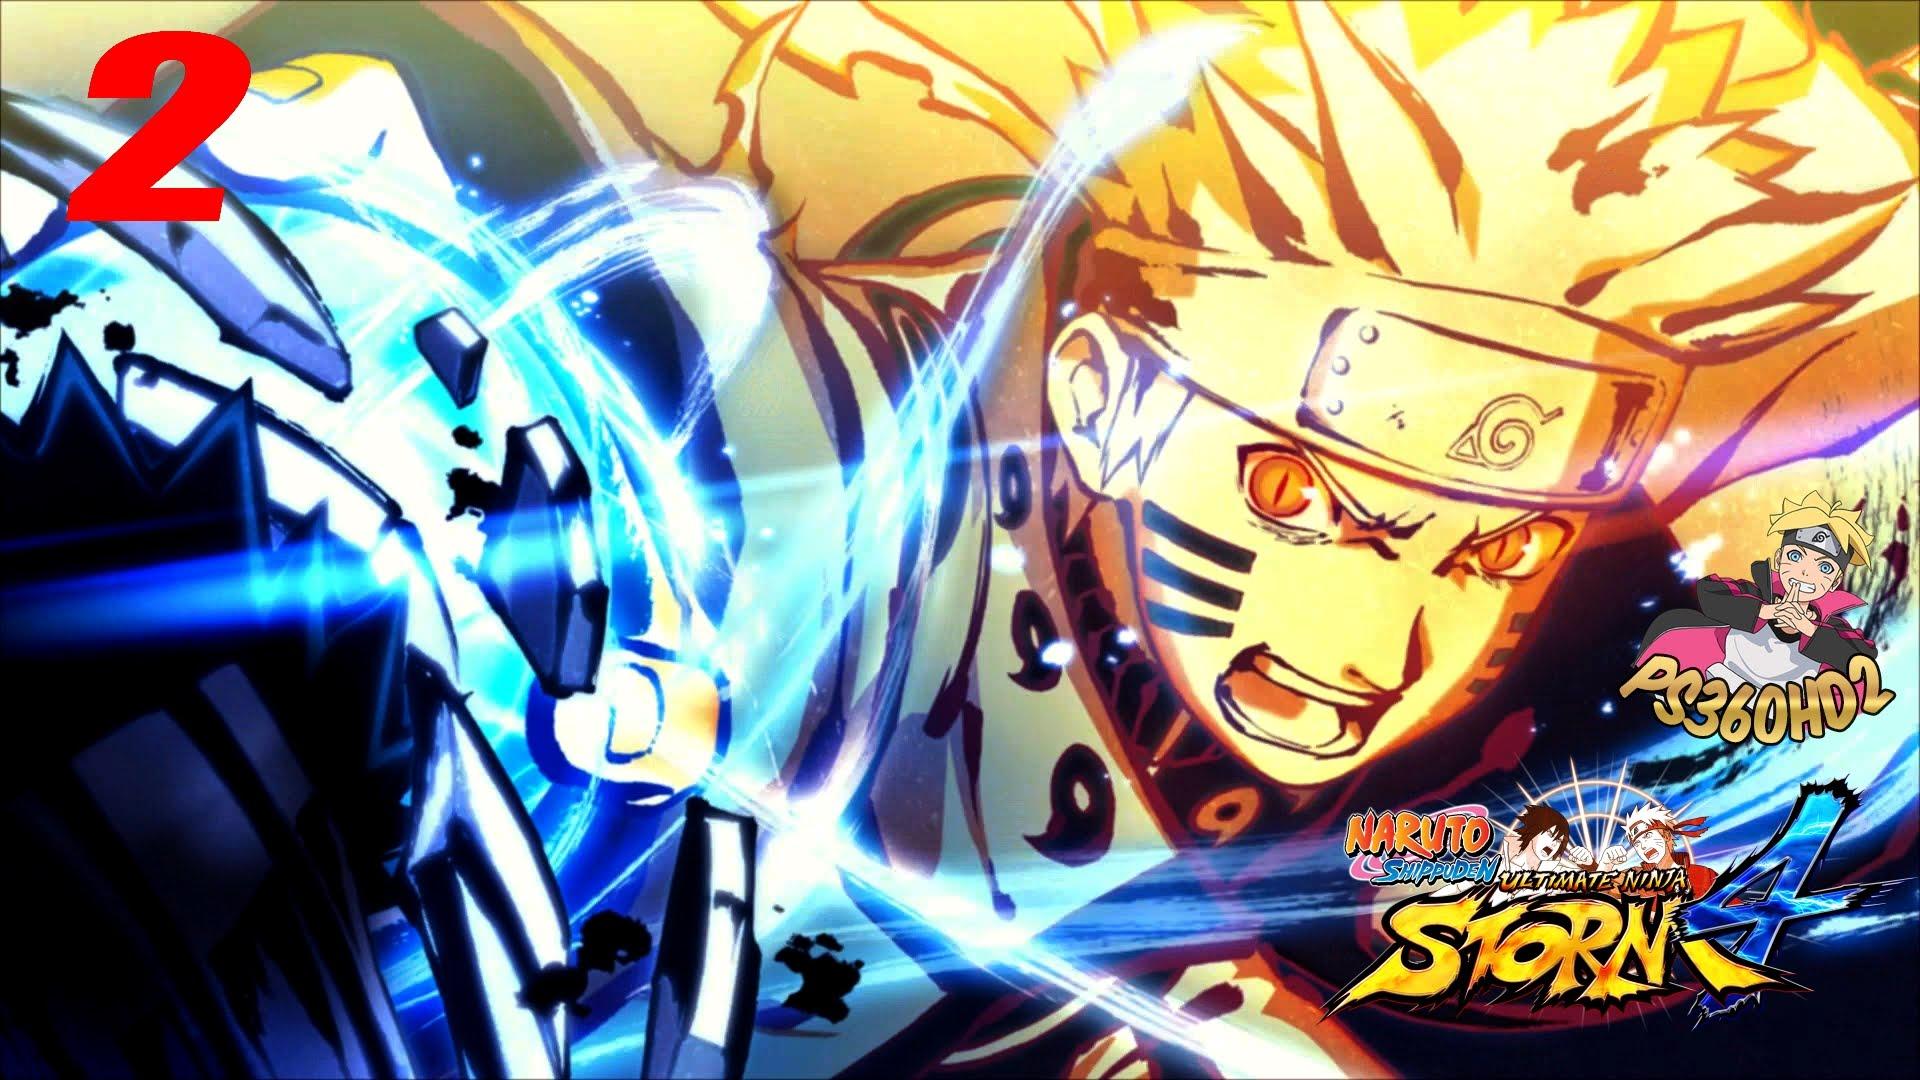 Naruto Shippuden: Ultimate Ninja Storm 4 Wallpapers - Wallpaper Cave